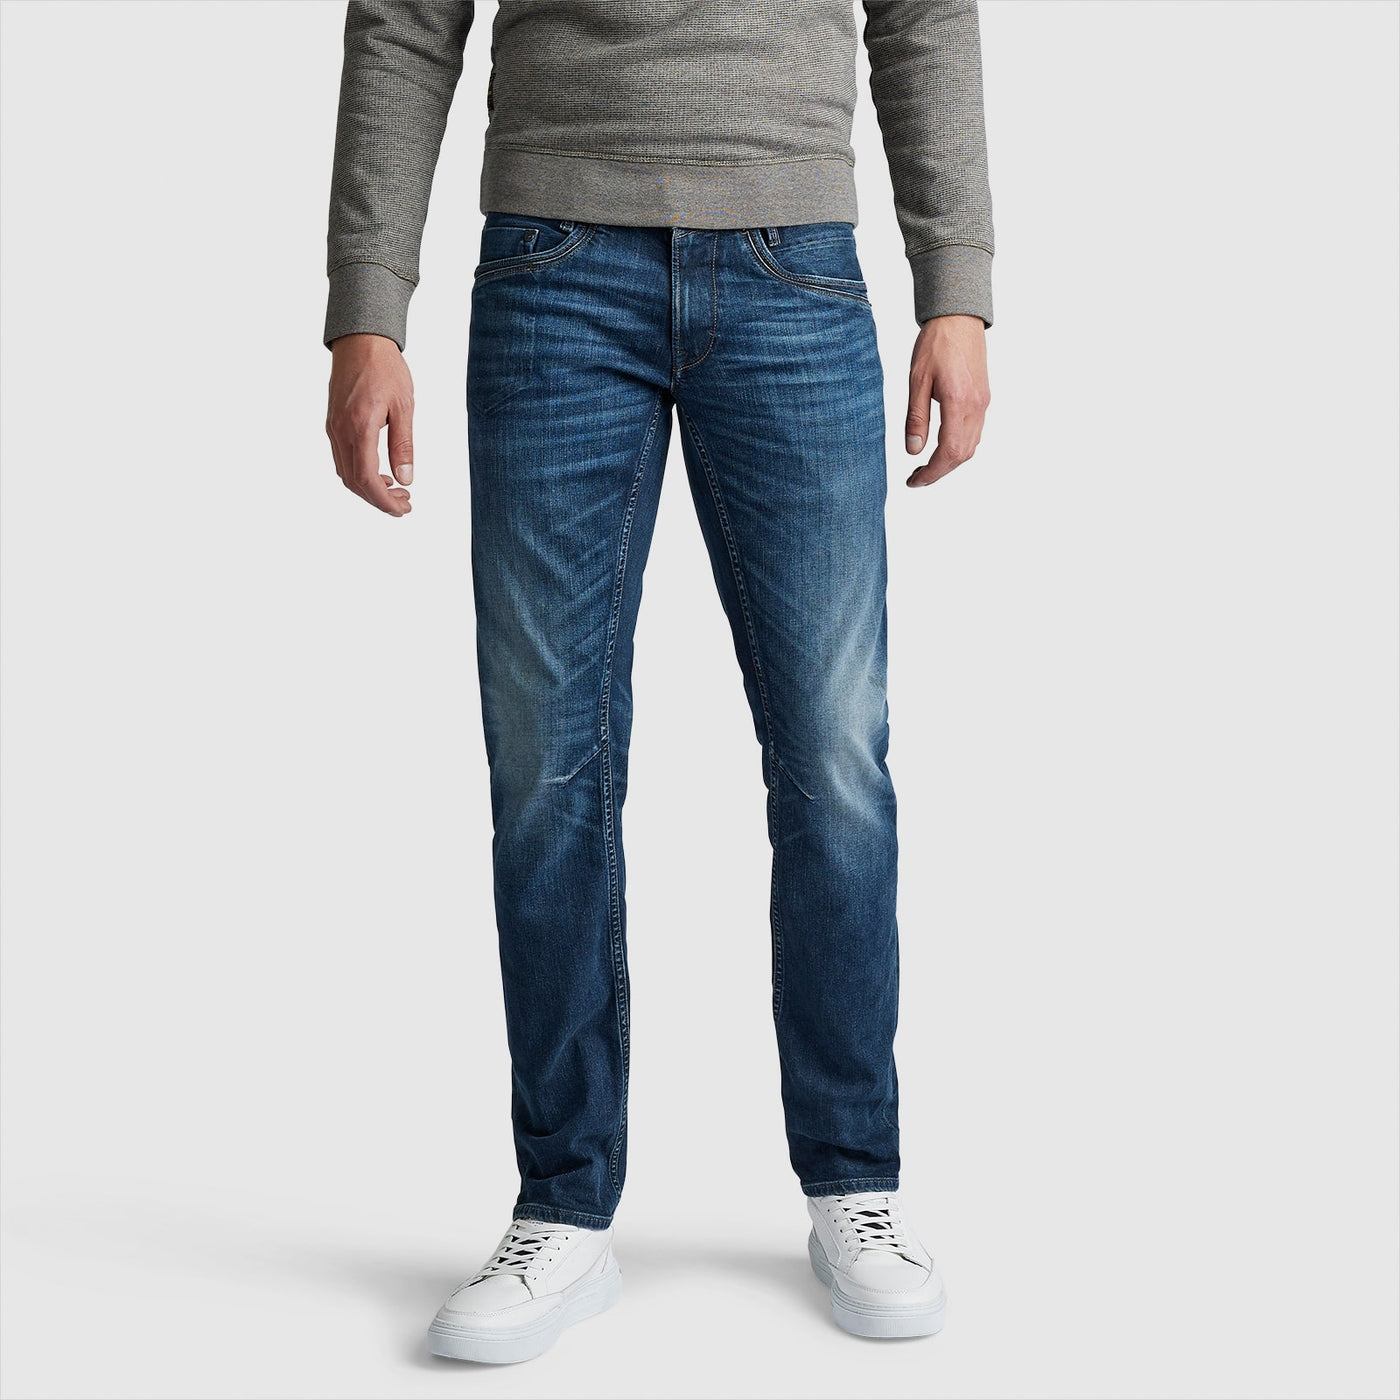 skymaster jeans dark indigo denim ptr650 diw pme legend jeans